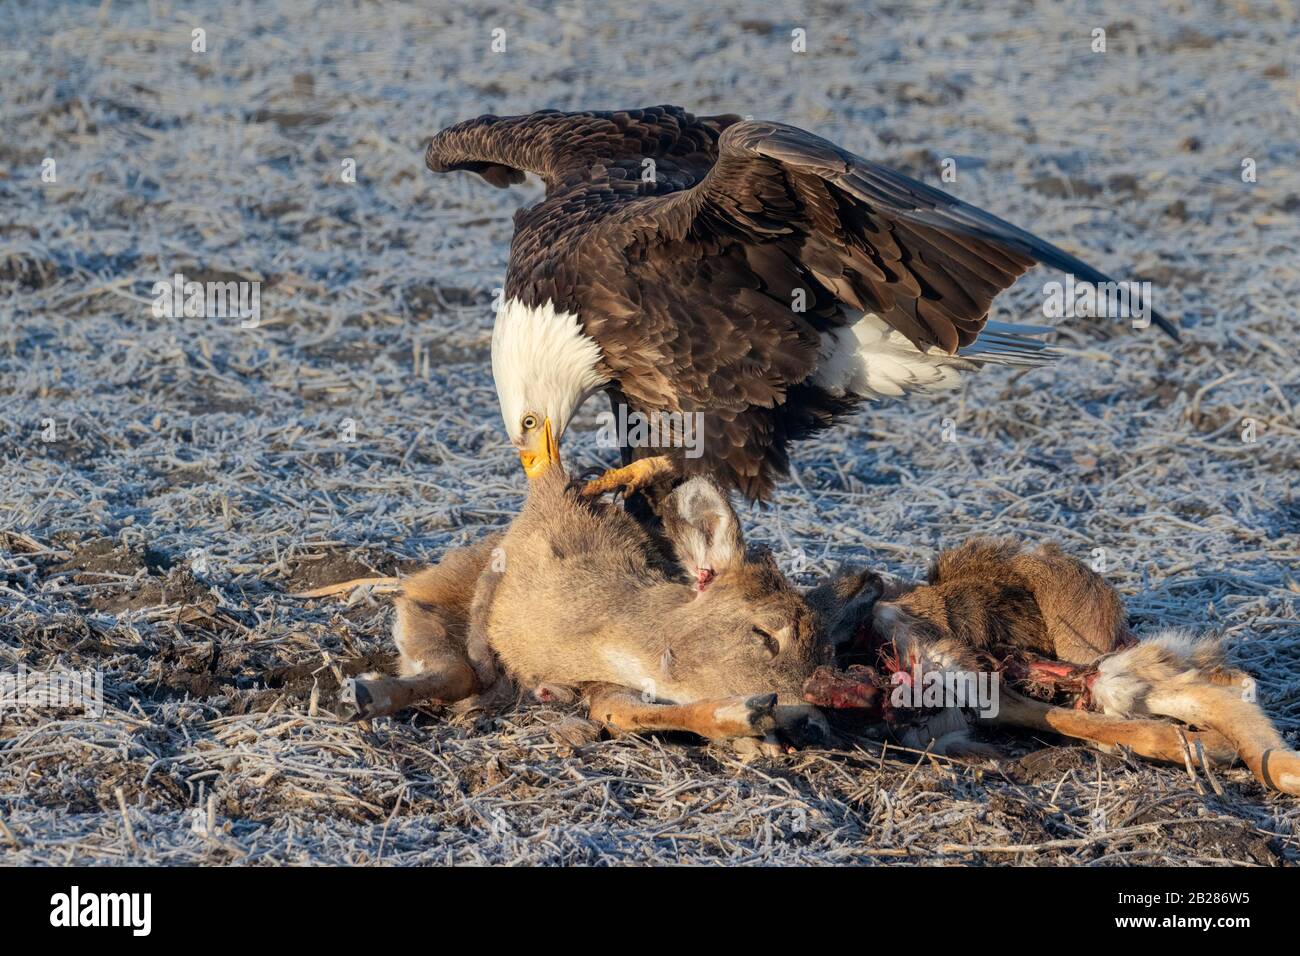 Bald eagle (Haliaeetus leucocephalus) scavenging on a roadkilled deer, Iowa, USA. Stock Photo